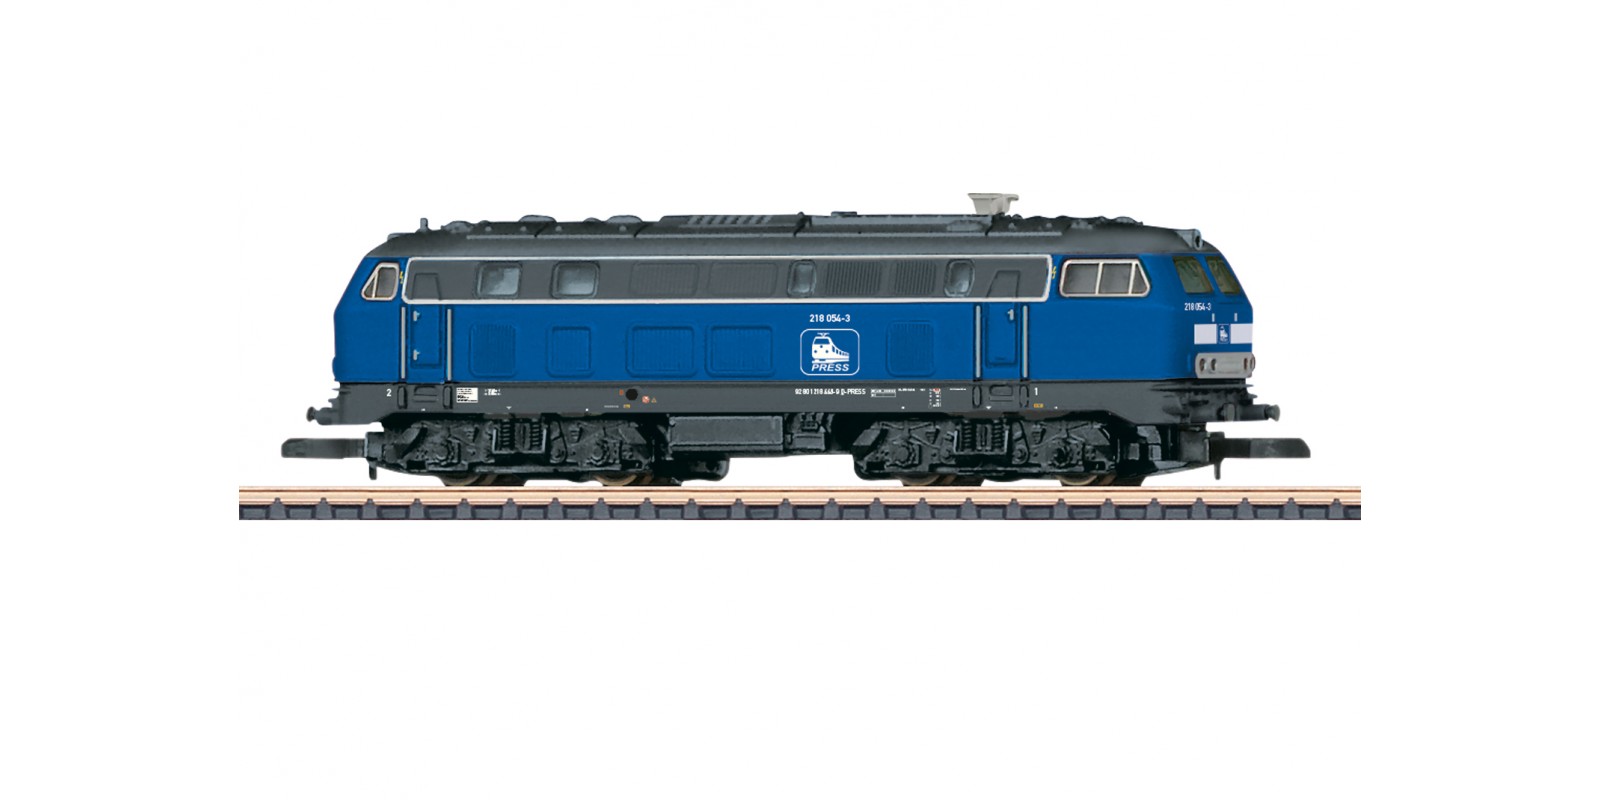 88806 Class 218 Diesel Locomotive